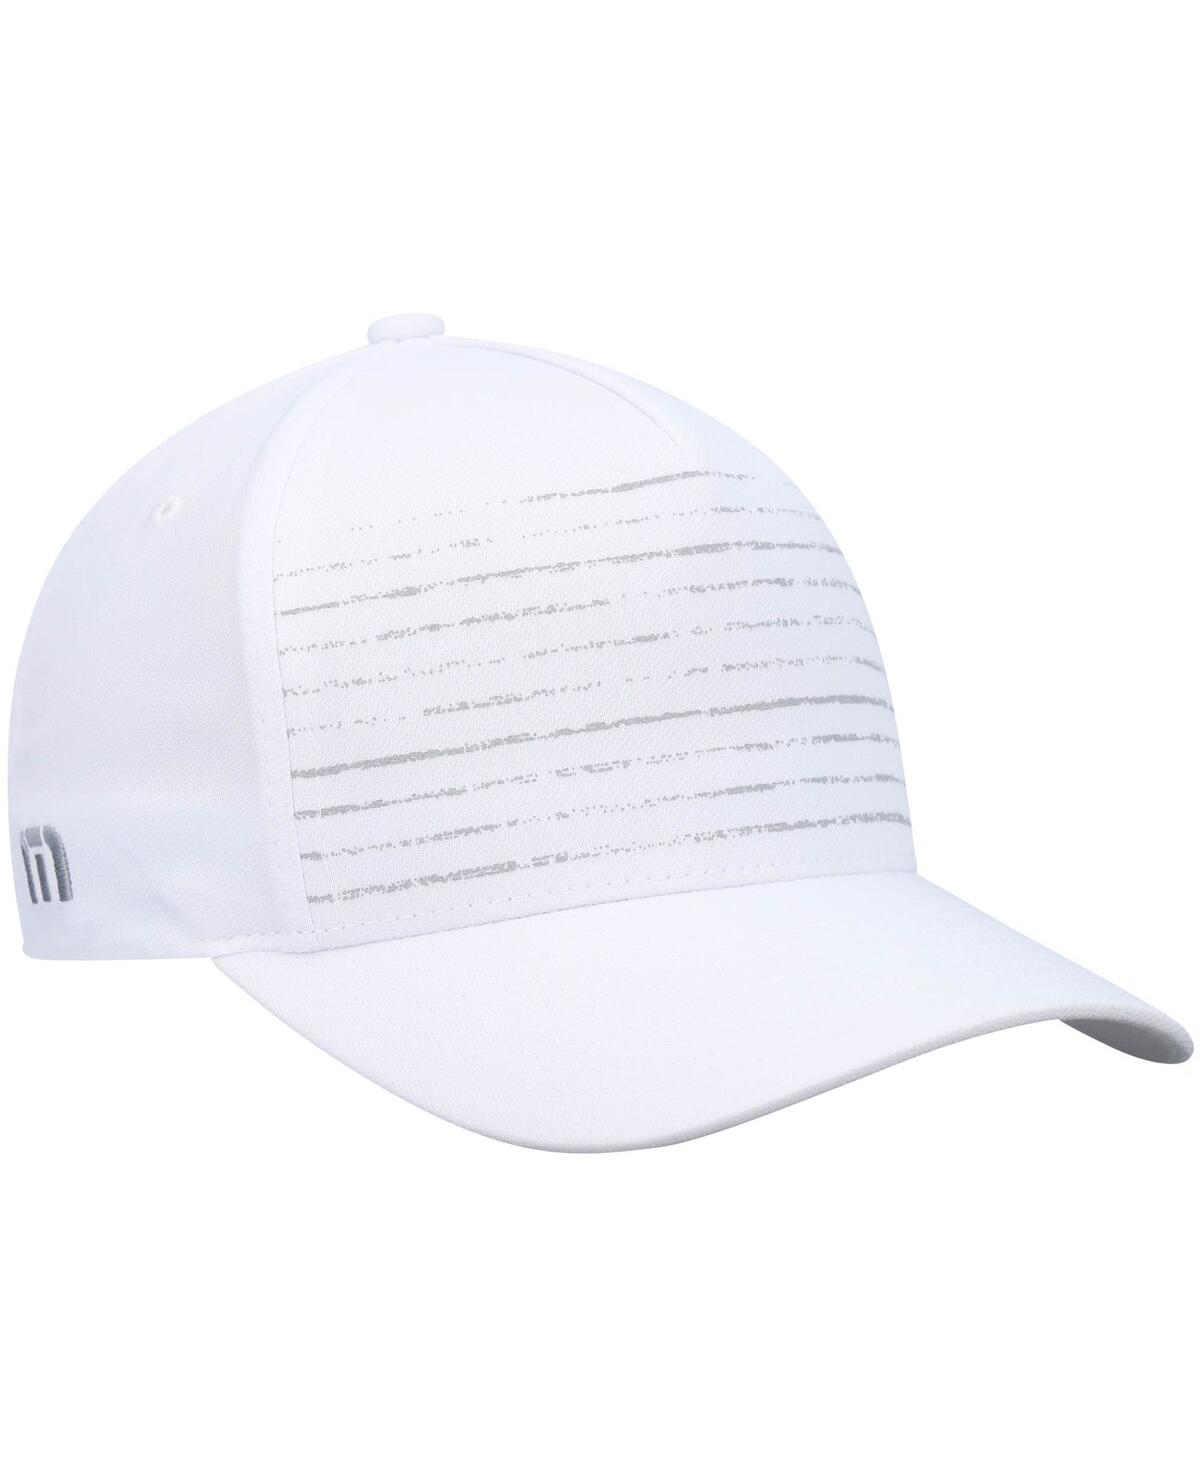 Shop Travis Mathew Men's Travismathew White Hot Streak Snapback Hat